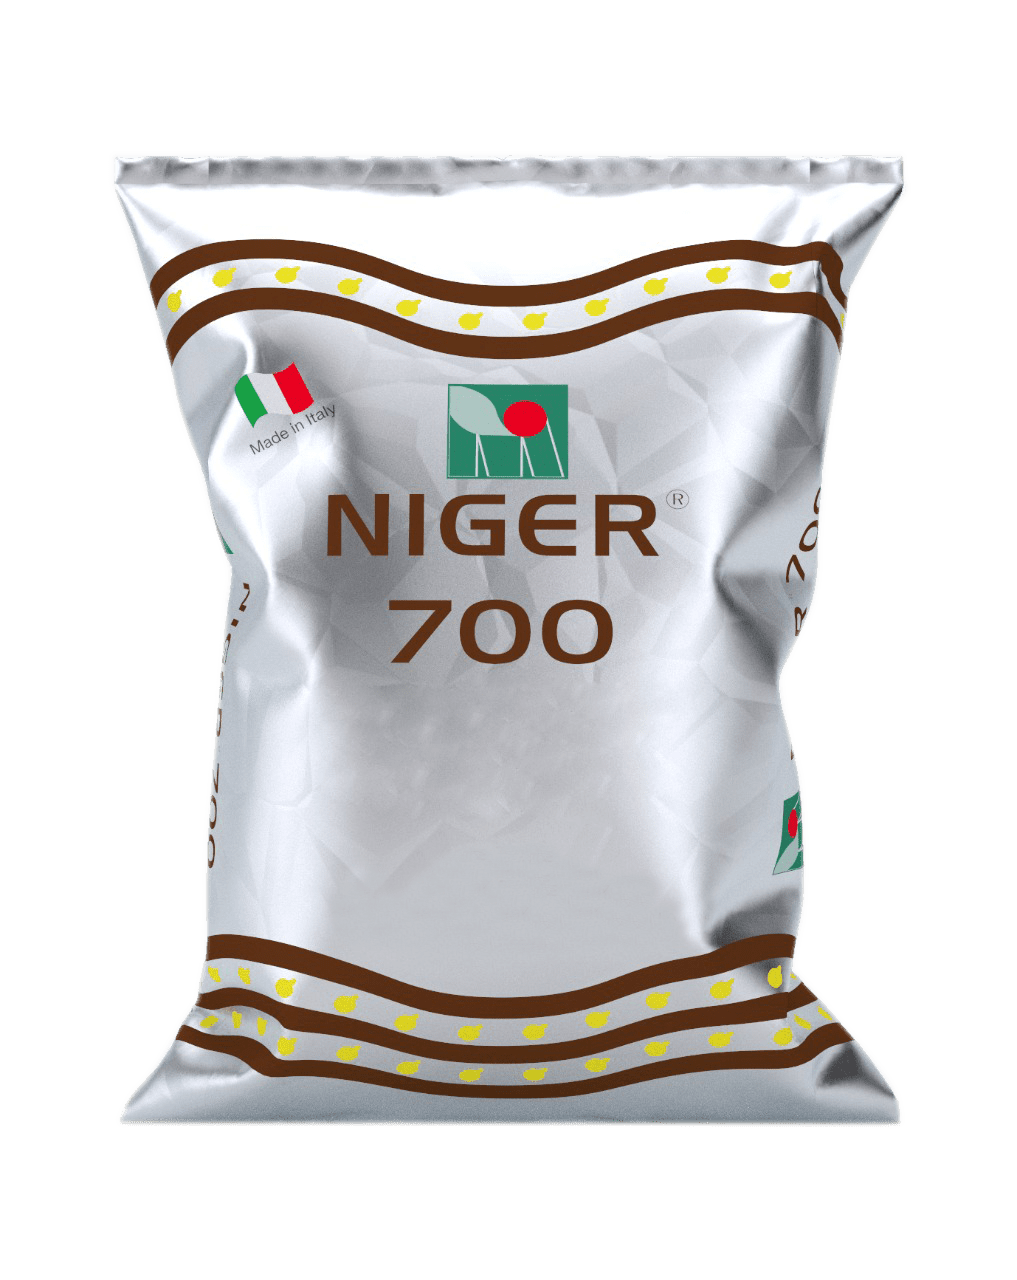 Niger 700